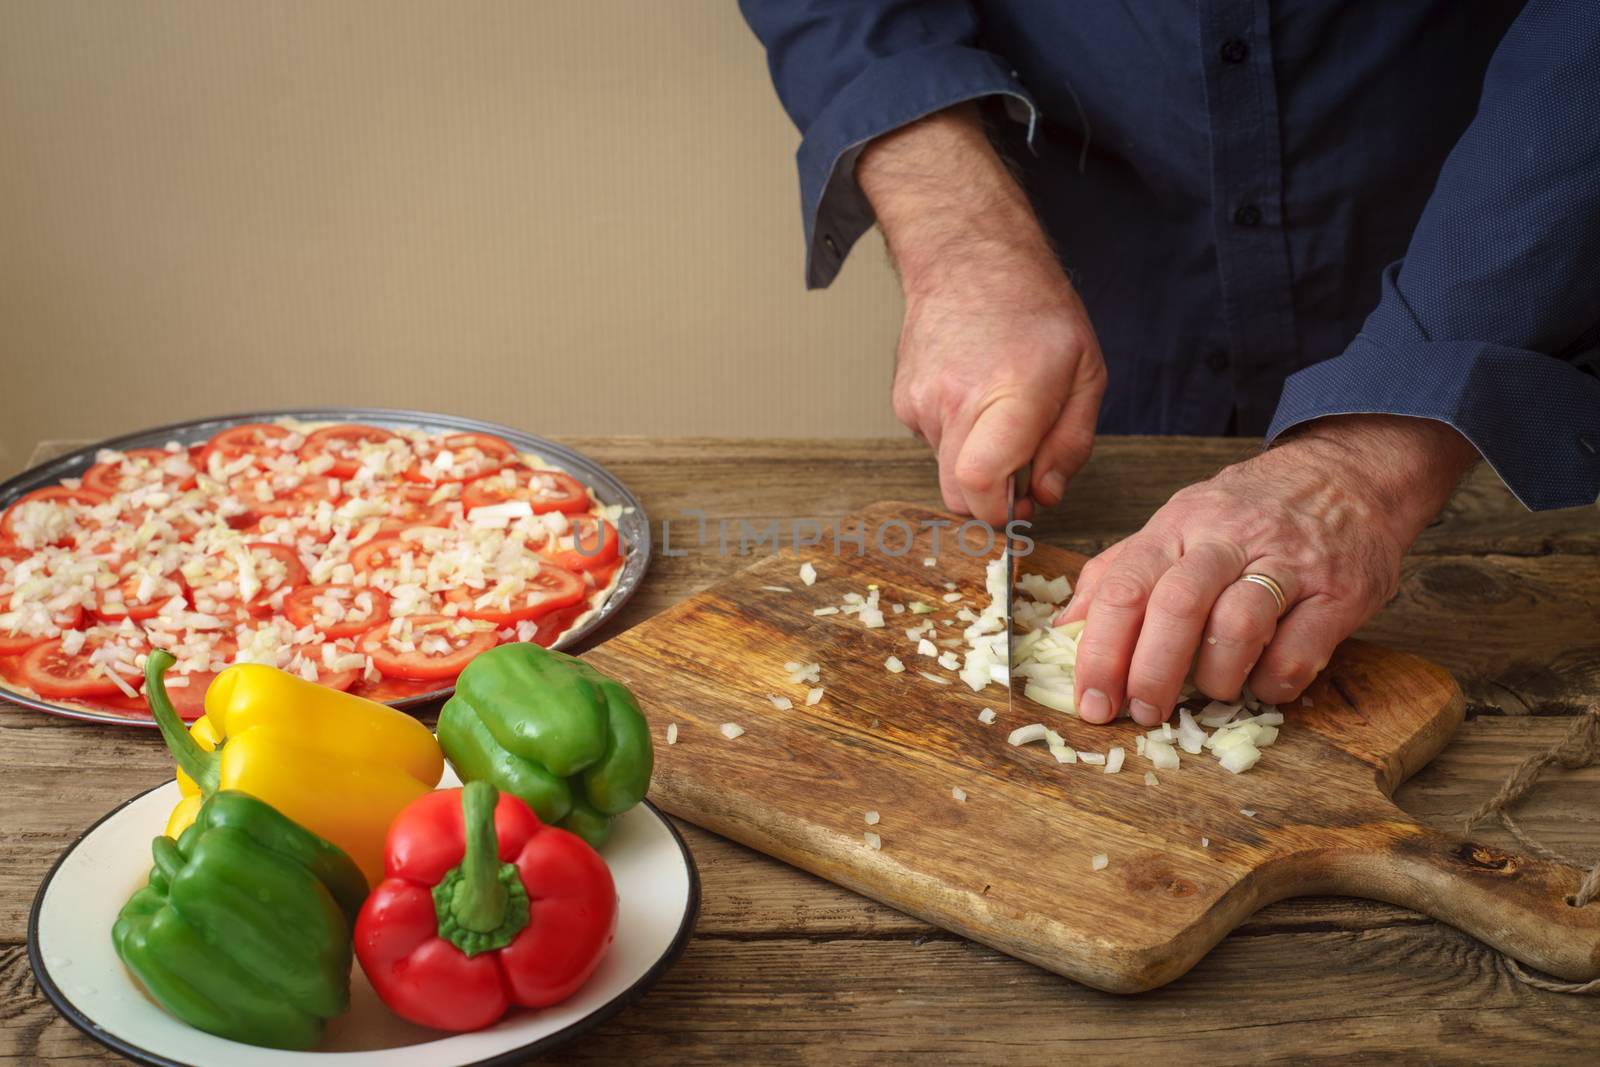 Man knife sliced onion pizza on a wooden board by Deniskarpenkov